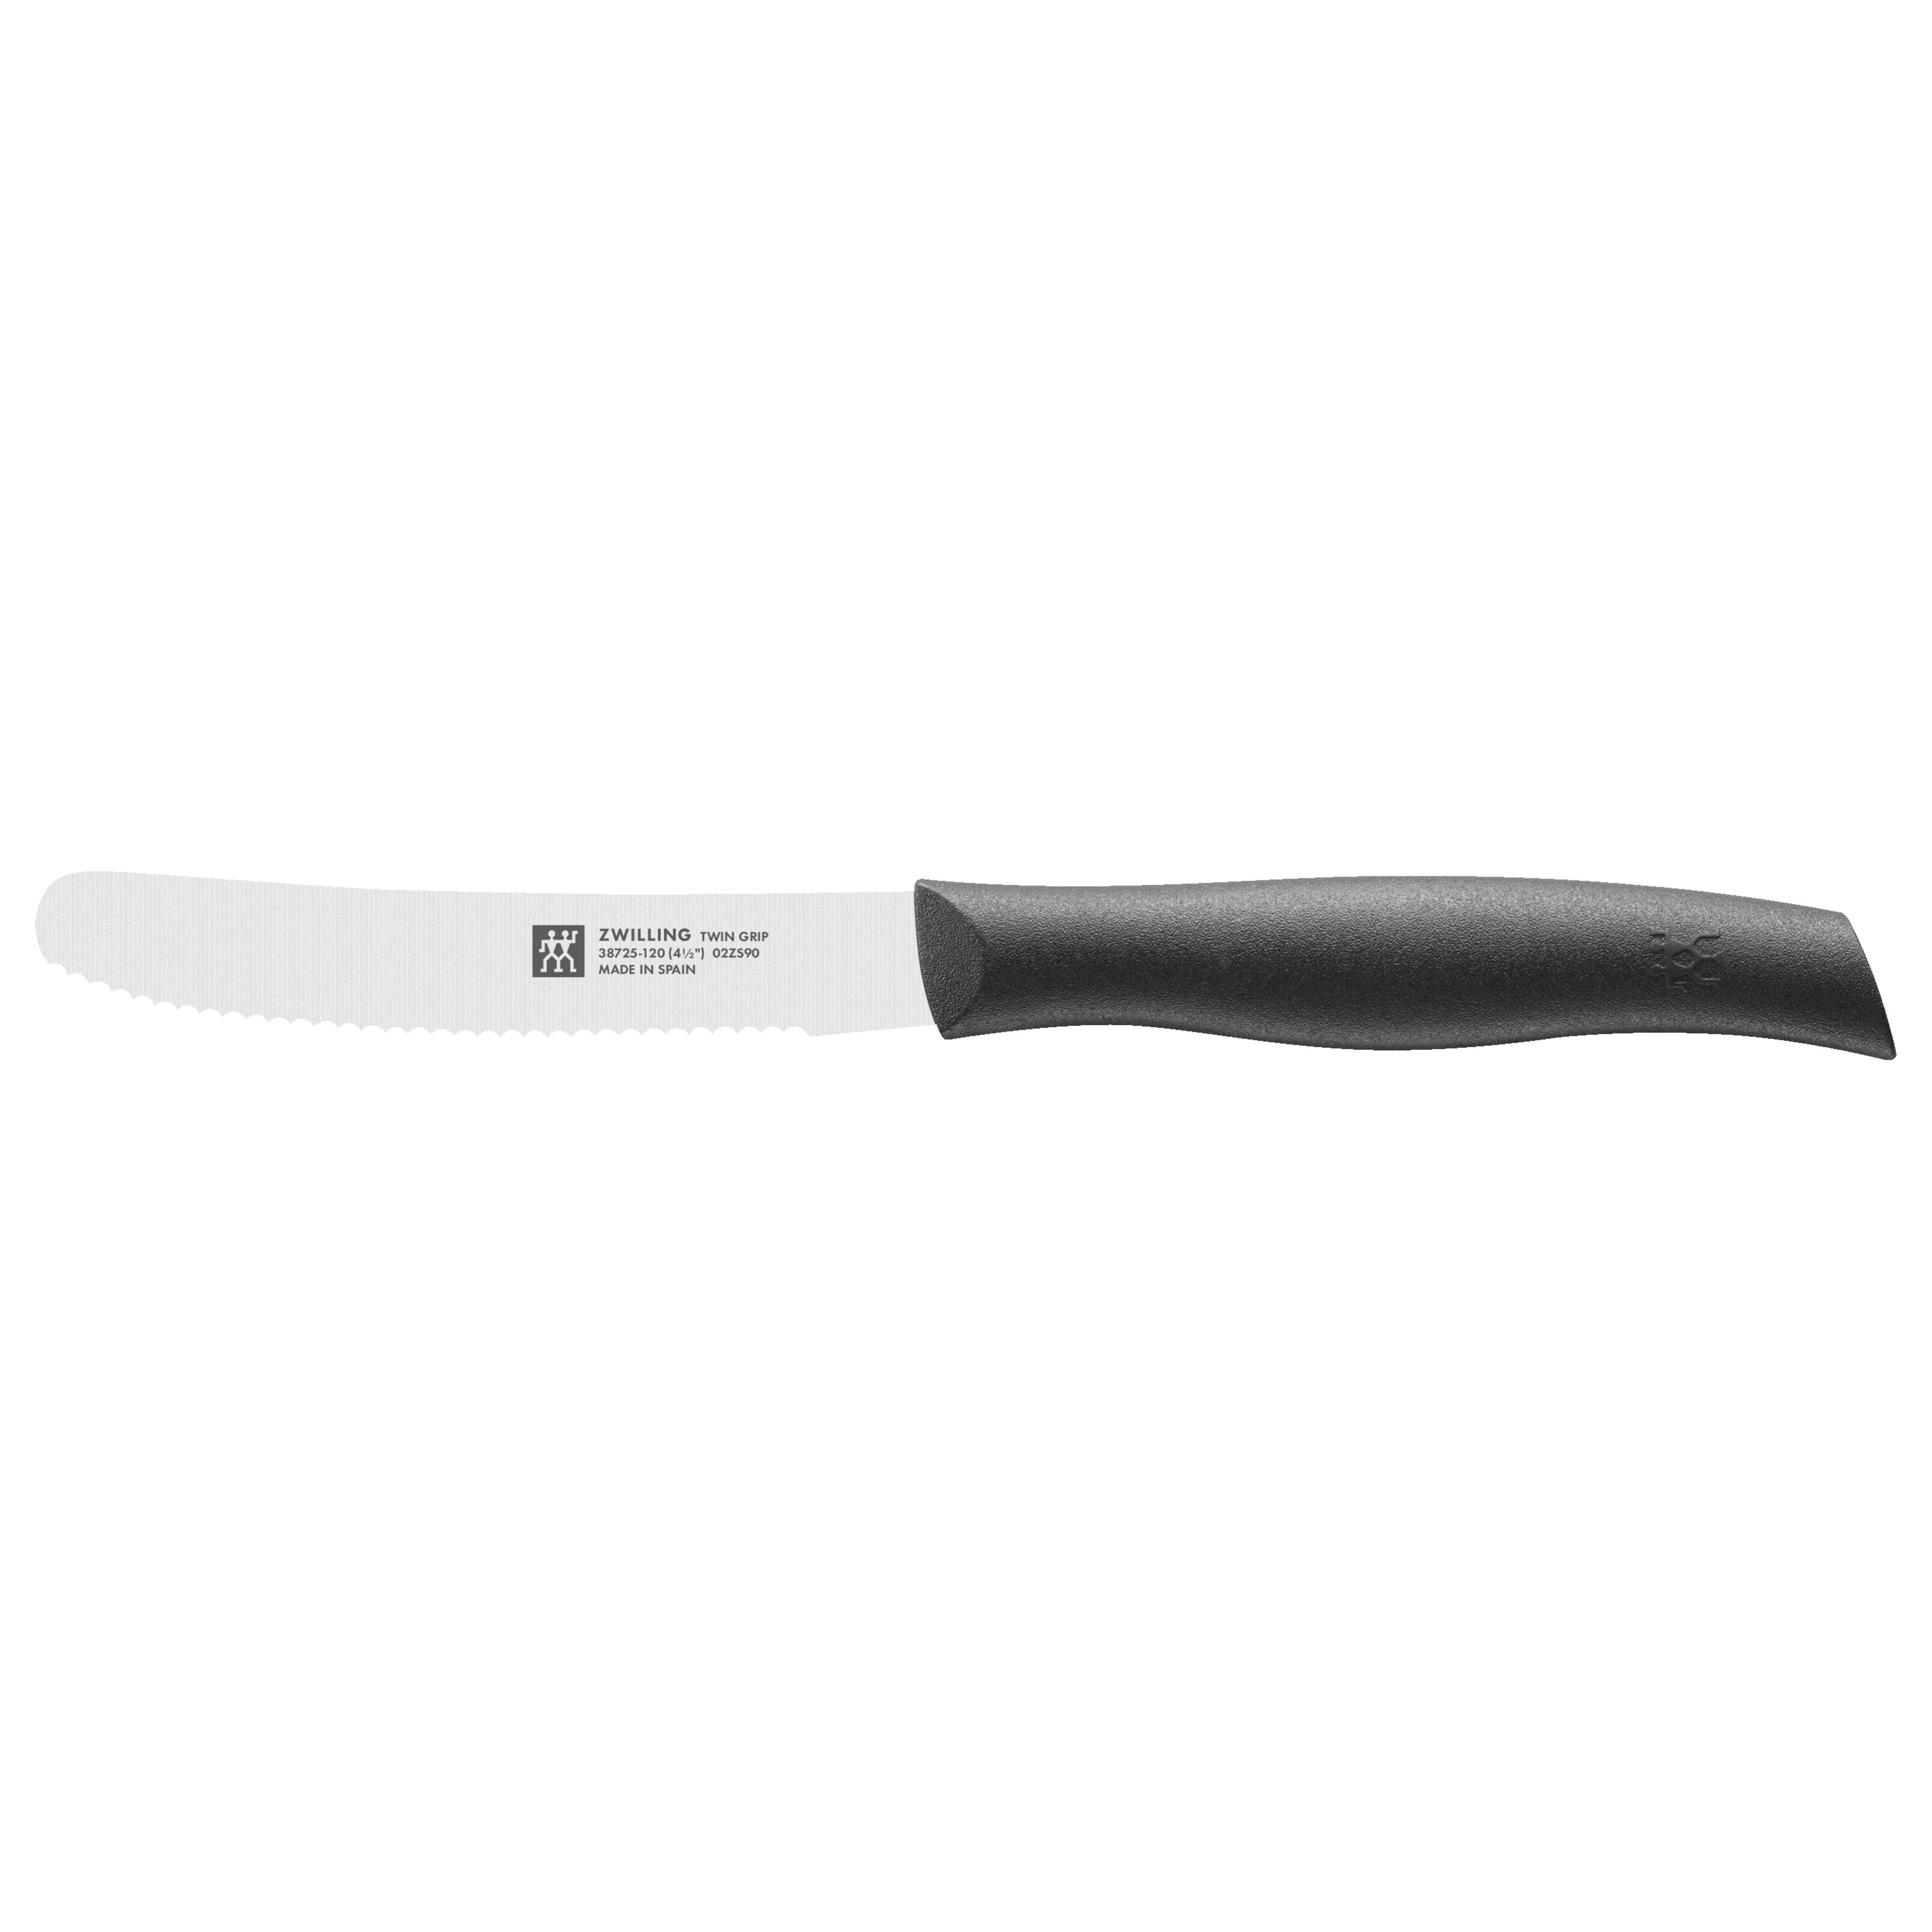 Plastic Knife, Strong Kitchen Knife, Cheap Plastic Knife Cake Server,  Serrated Vegetable Knife, Best Tomato Knife, Easy To Use Plastic Knives,  Chefs